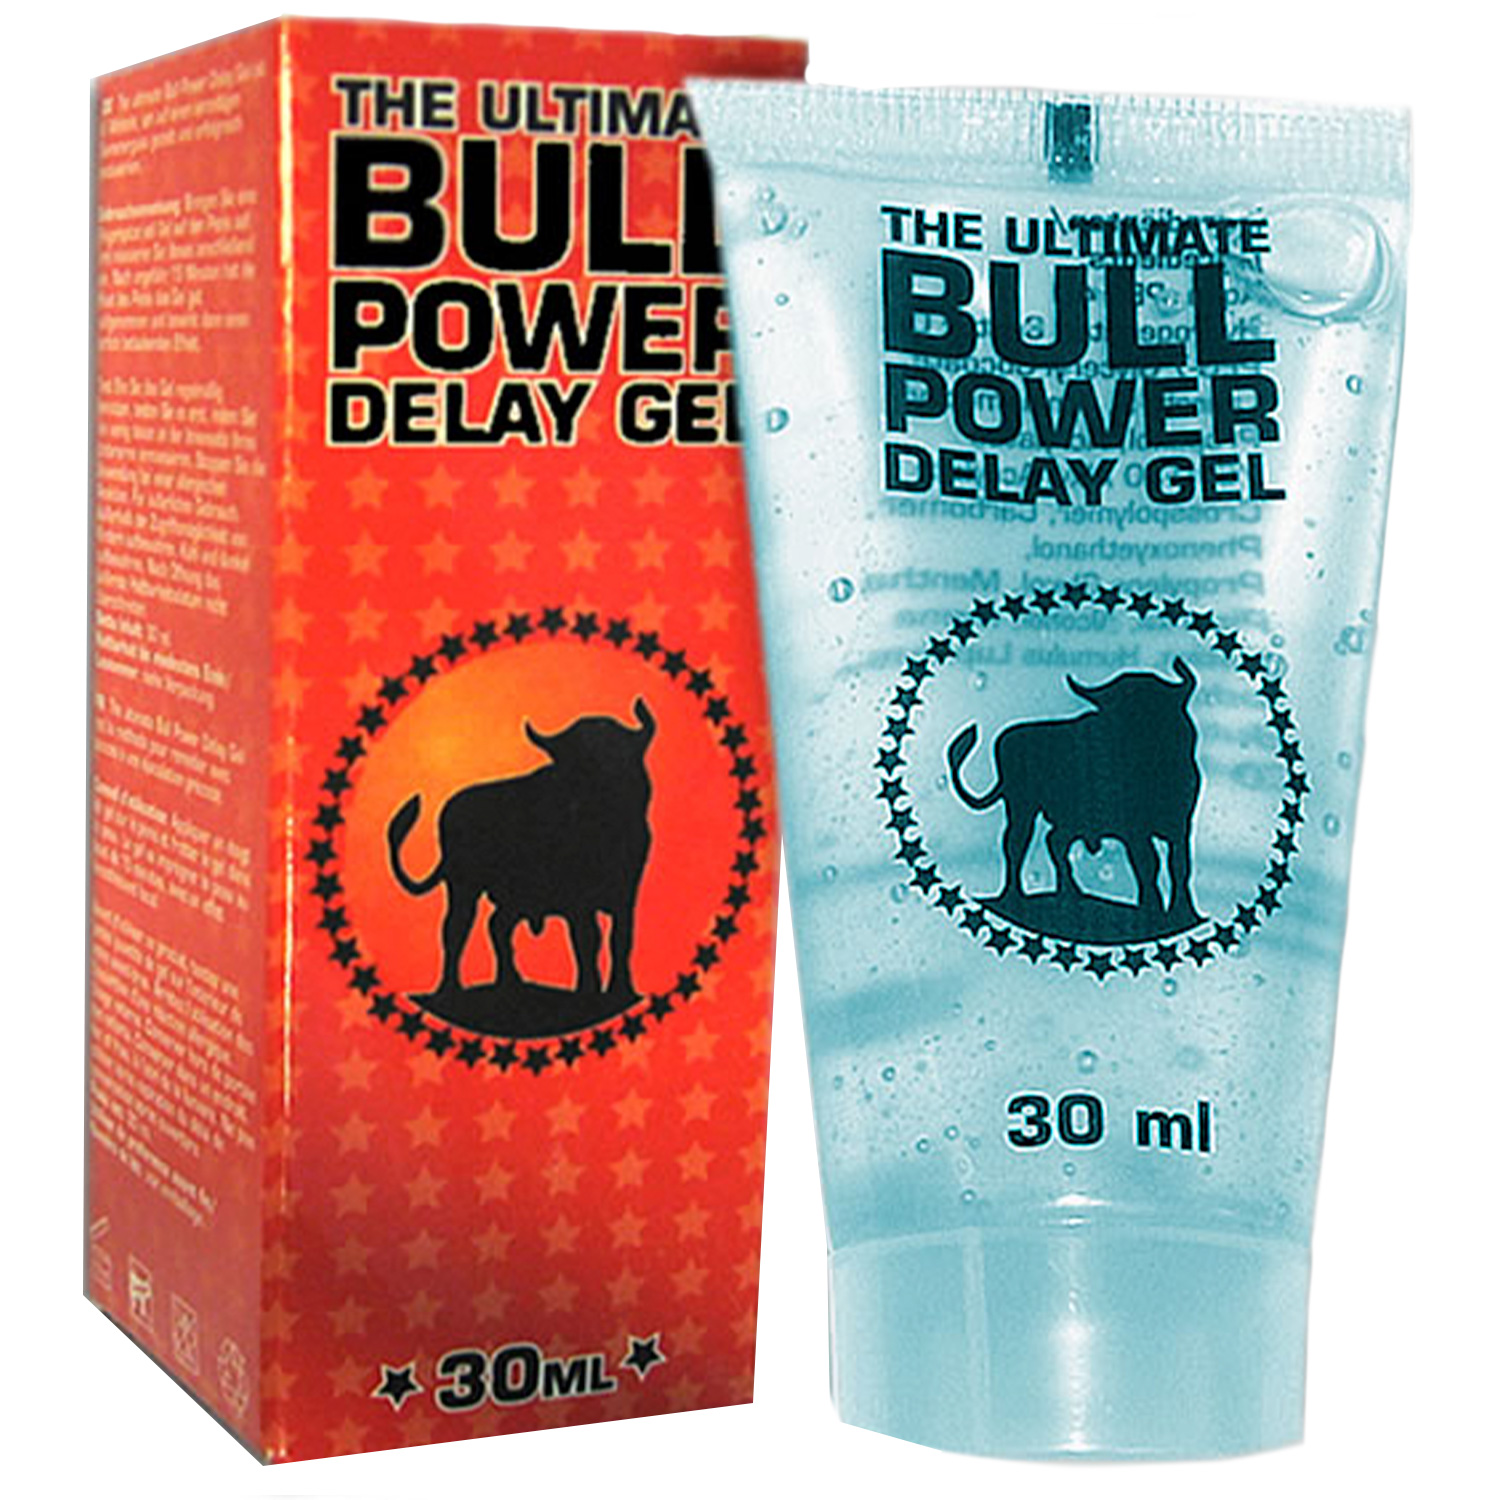 Bull Power Delay Gel 30 ml      - Klar thumbnail